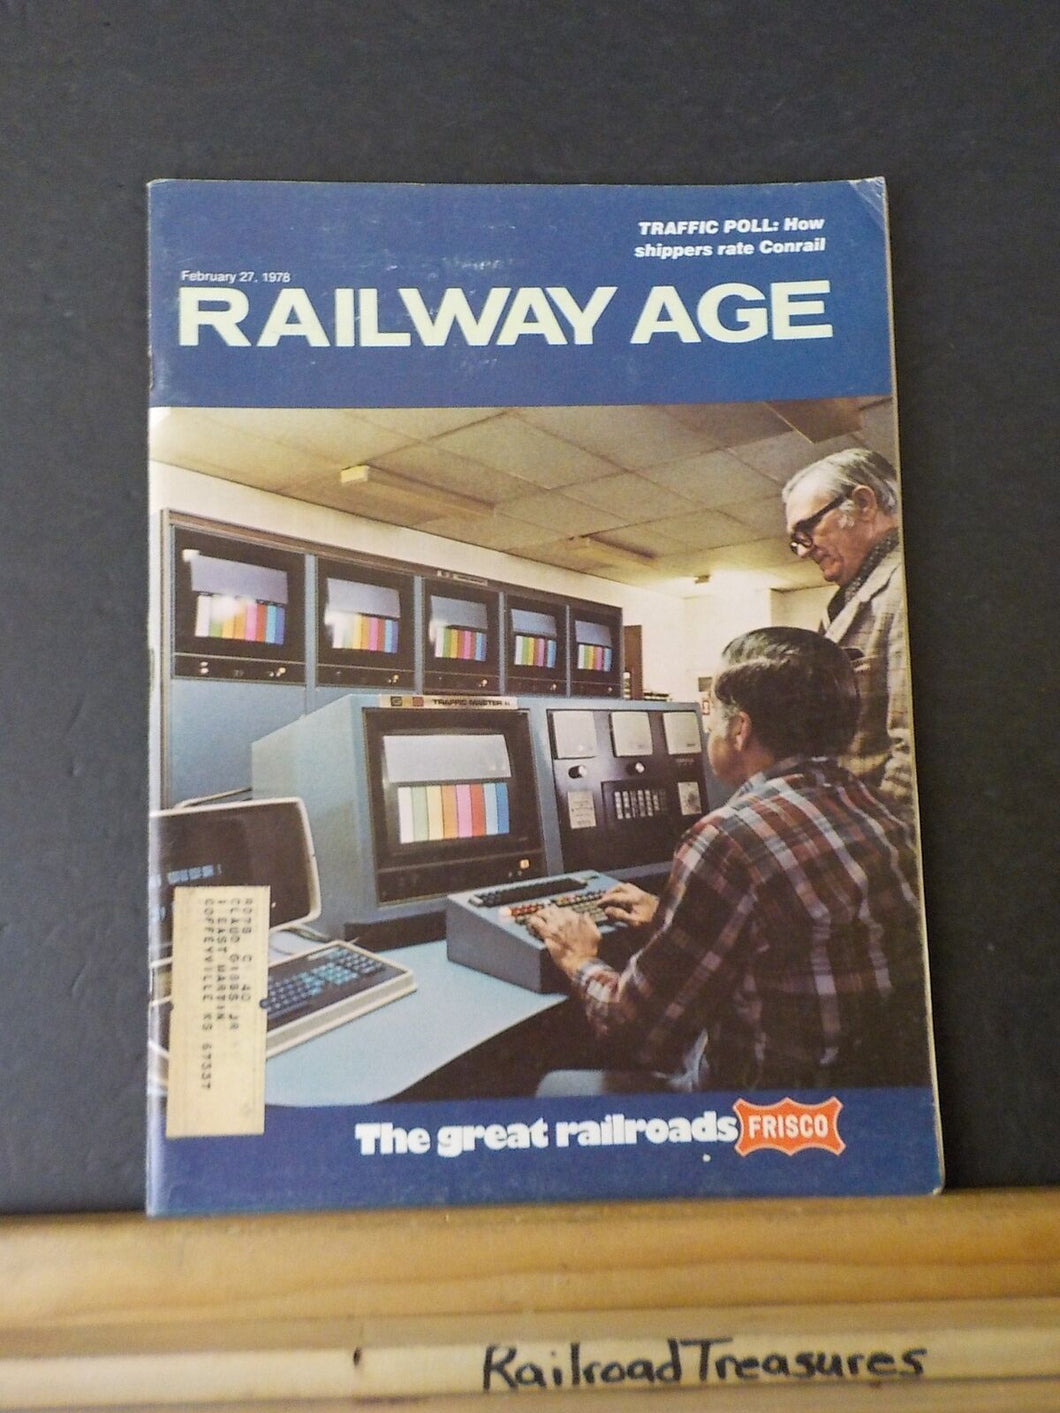 Railway Age 1978 February 27 Frisco the great railroads